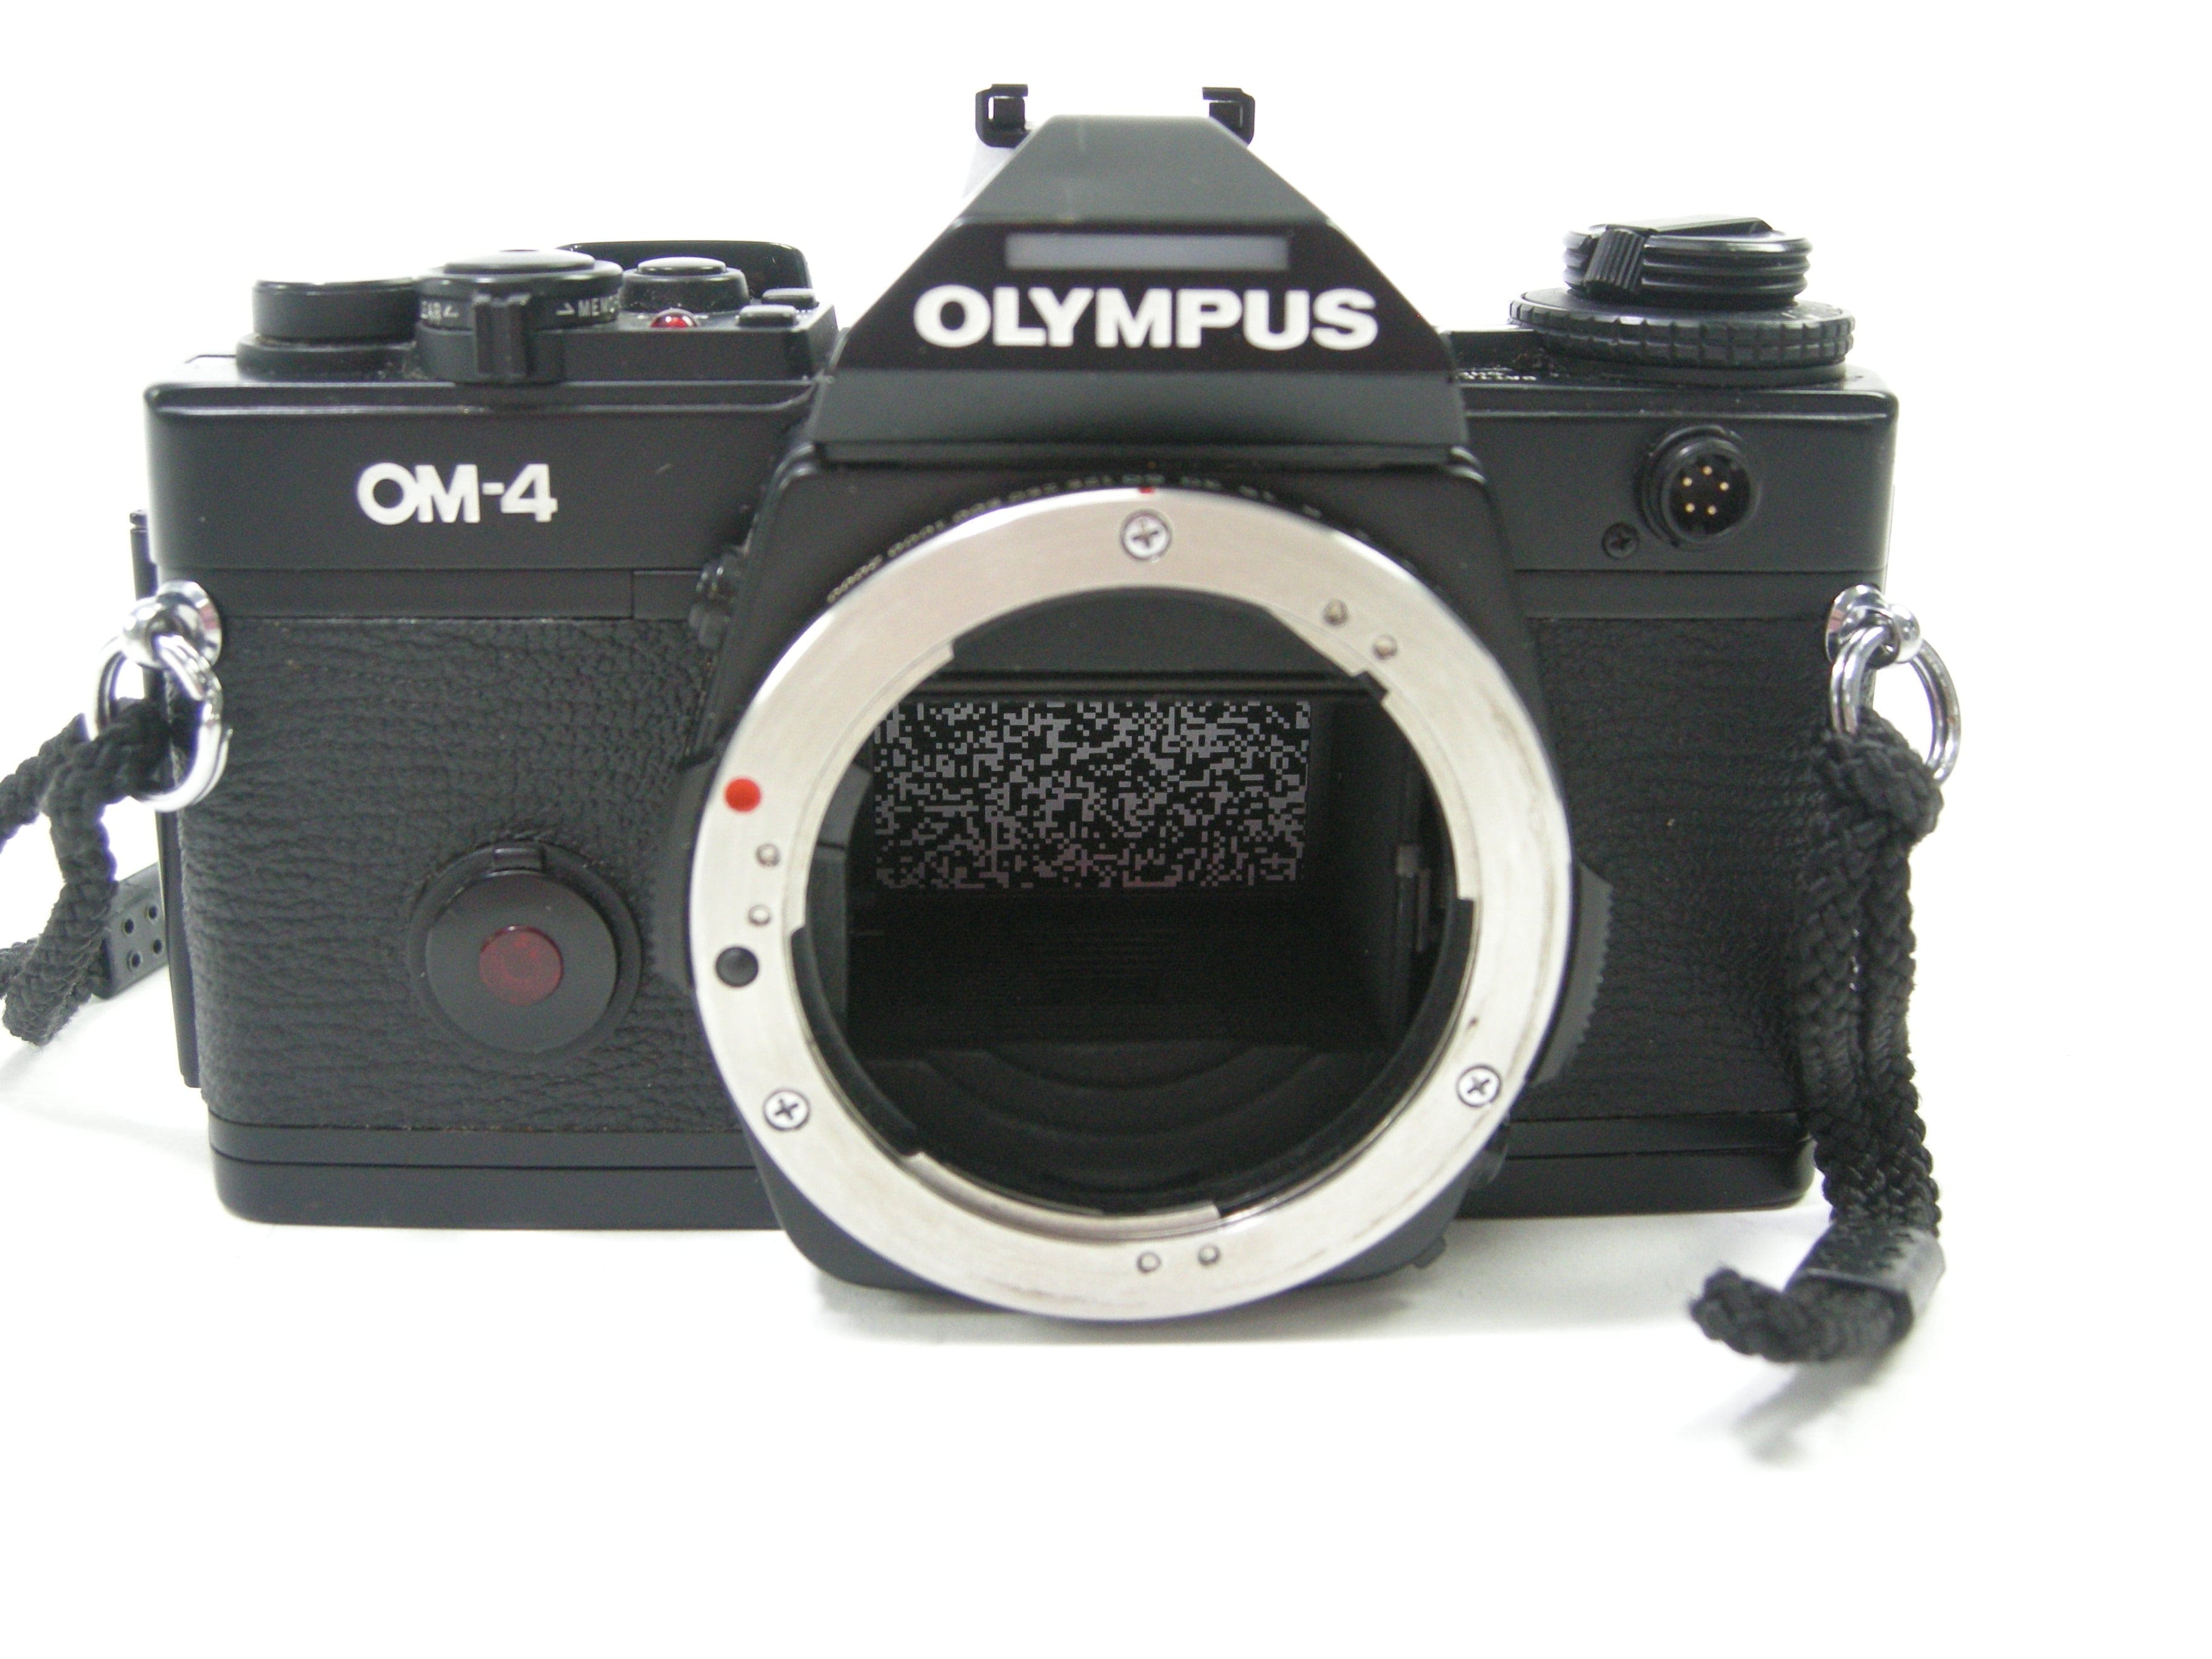 Olympus OM-4 35mm SLR camera body only (Parts)